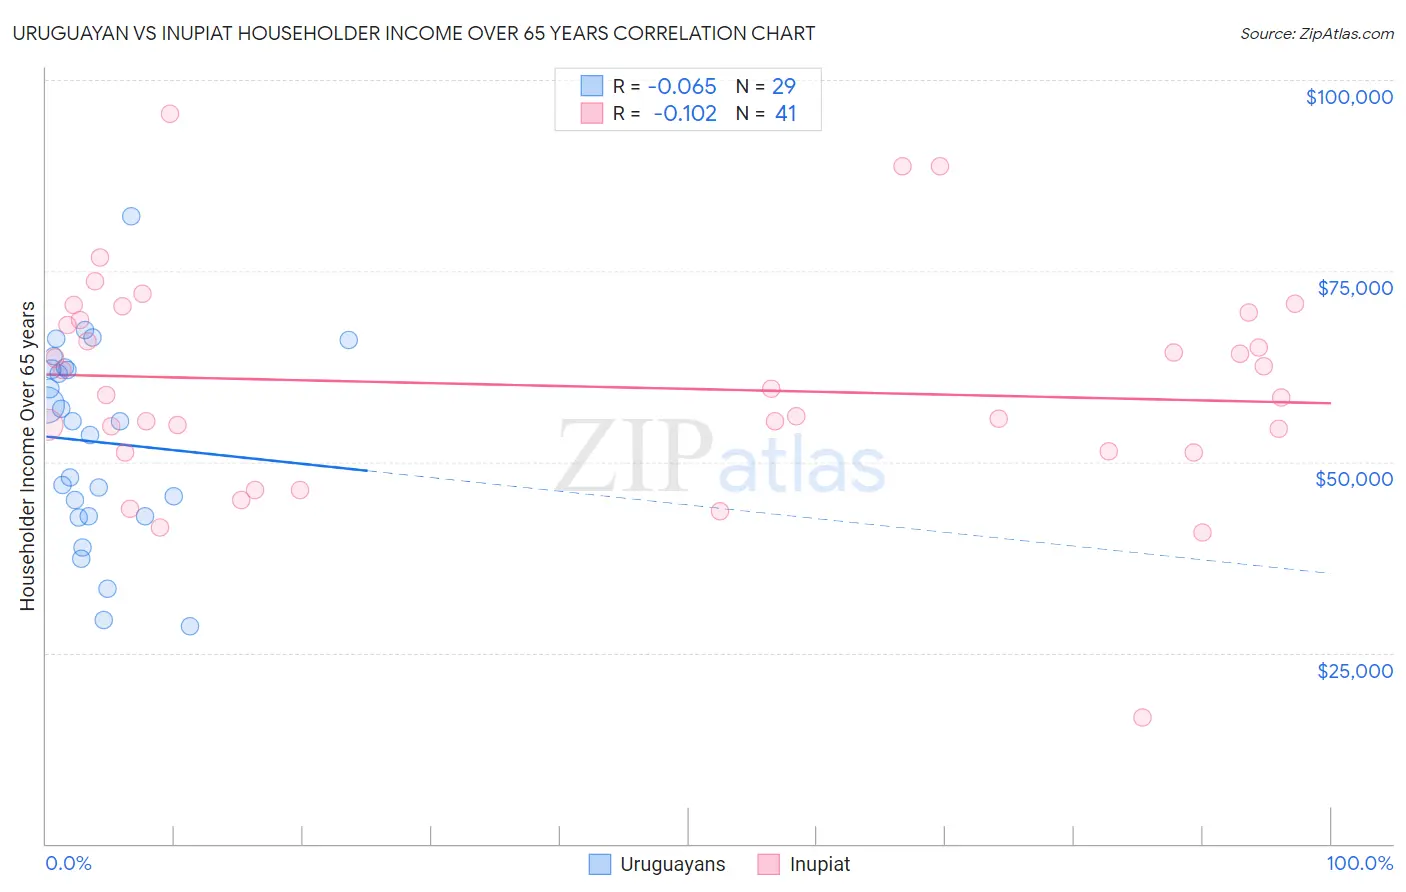 Uruguayan vs Inupiat Householder Income Over 65 years